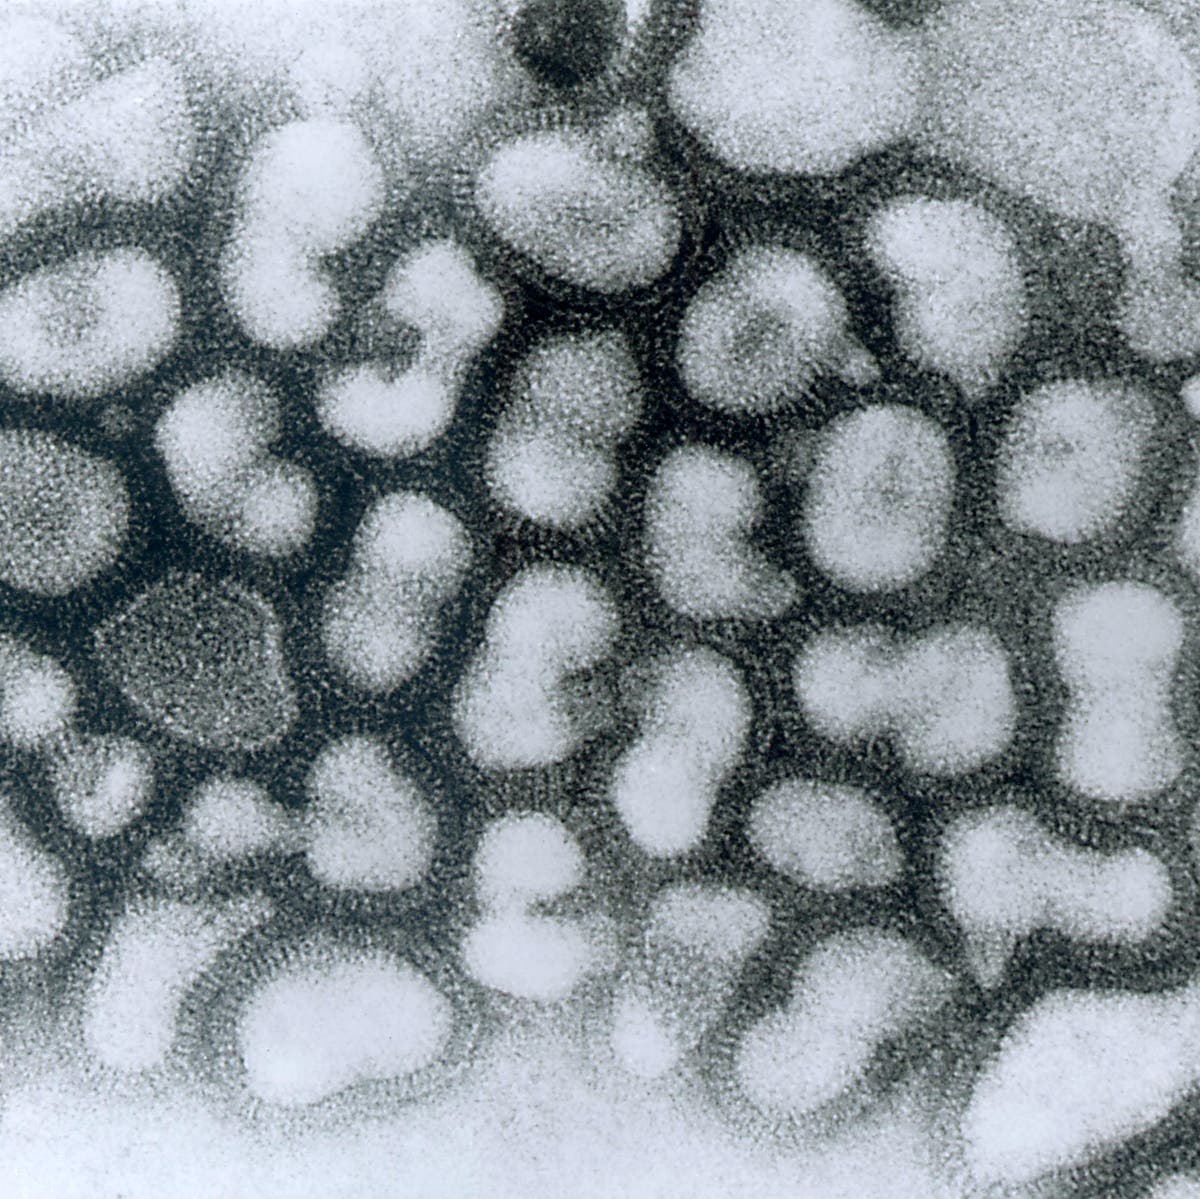 H5N1-Viren